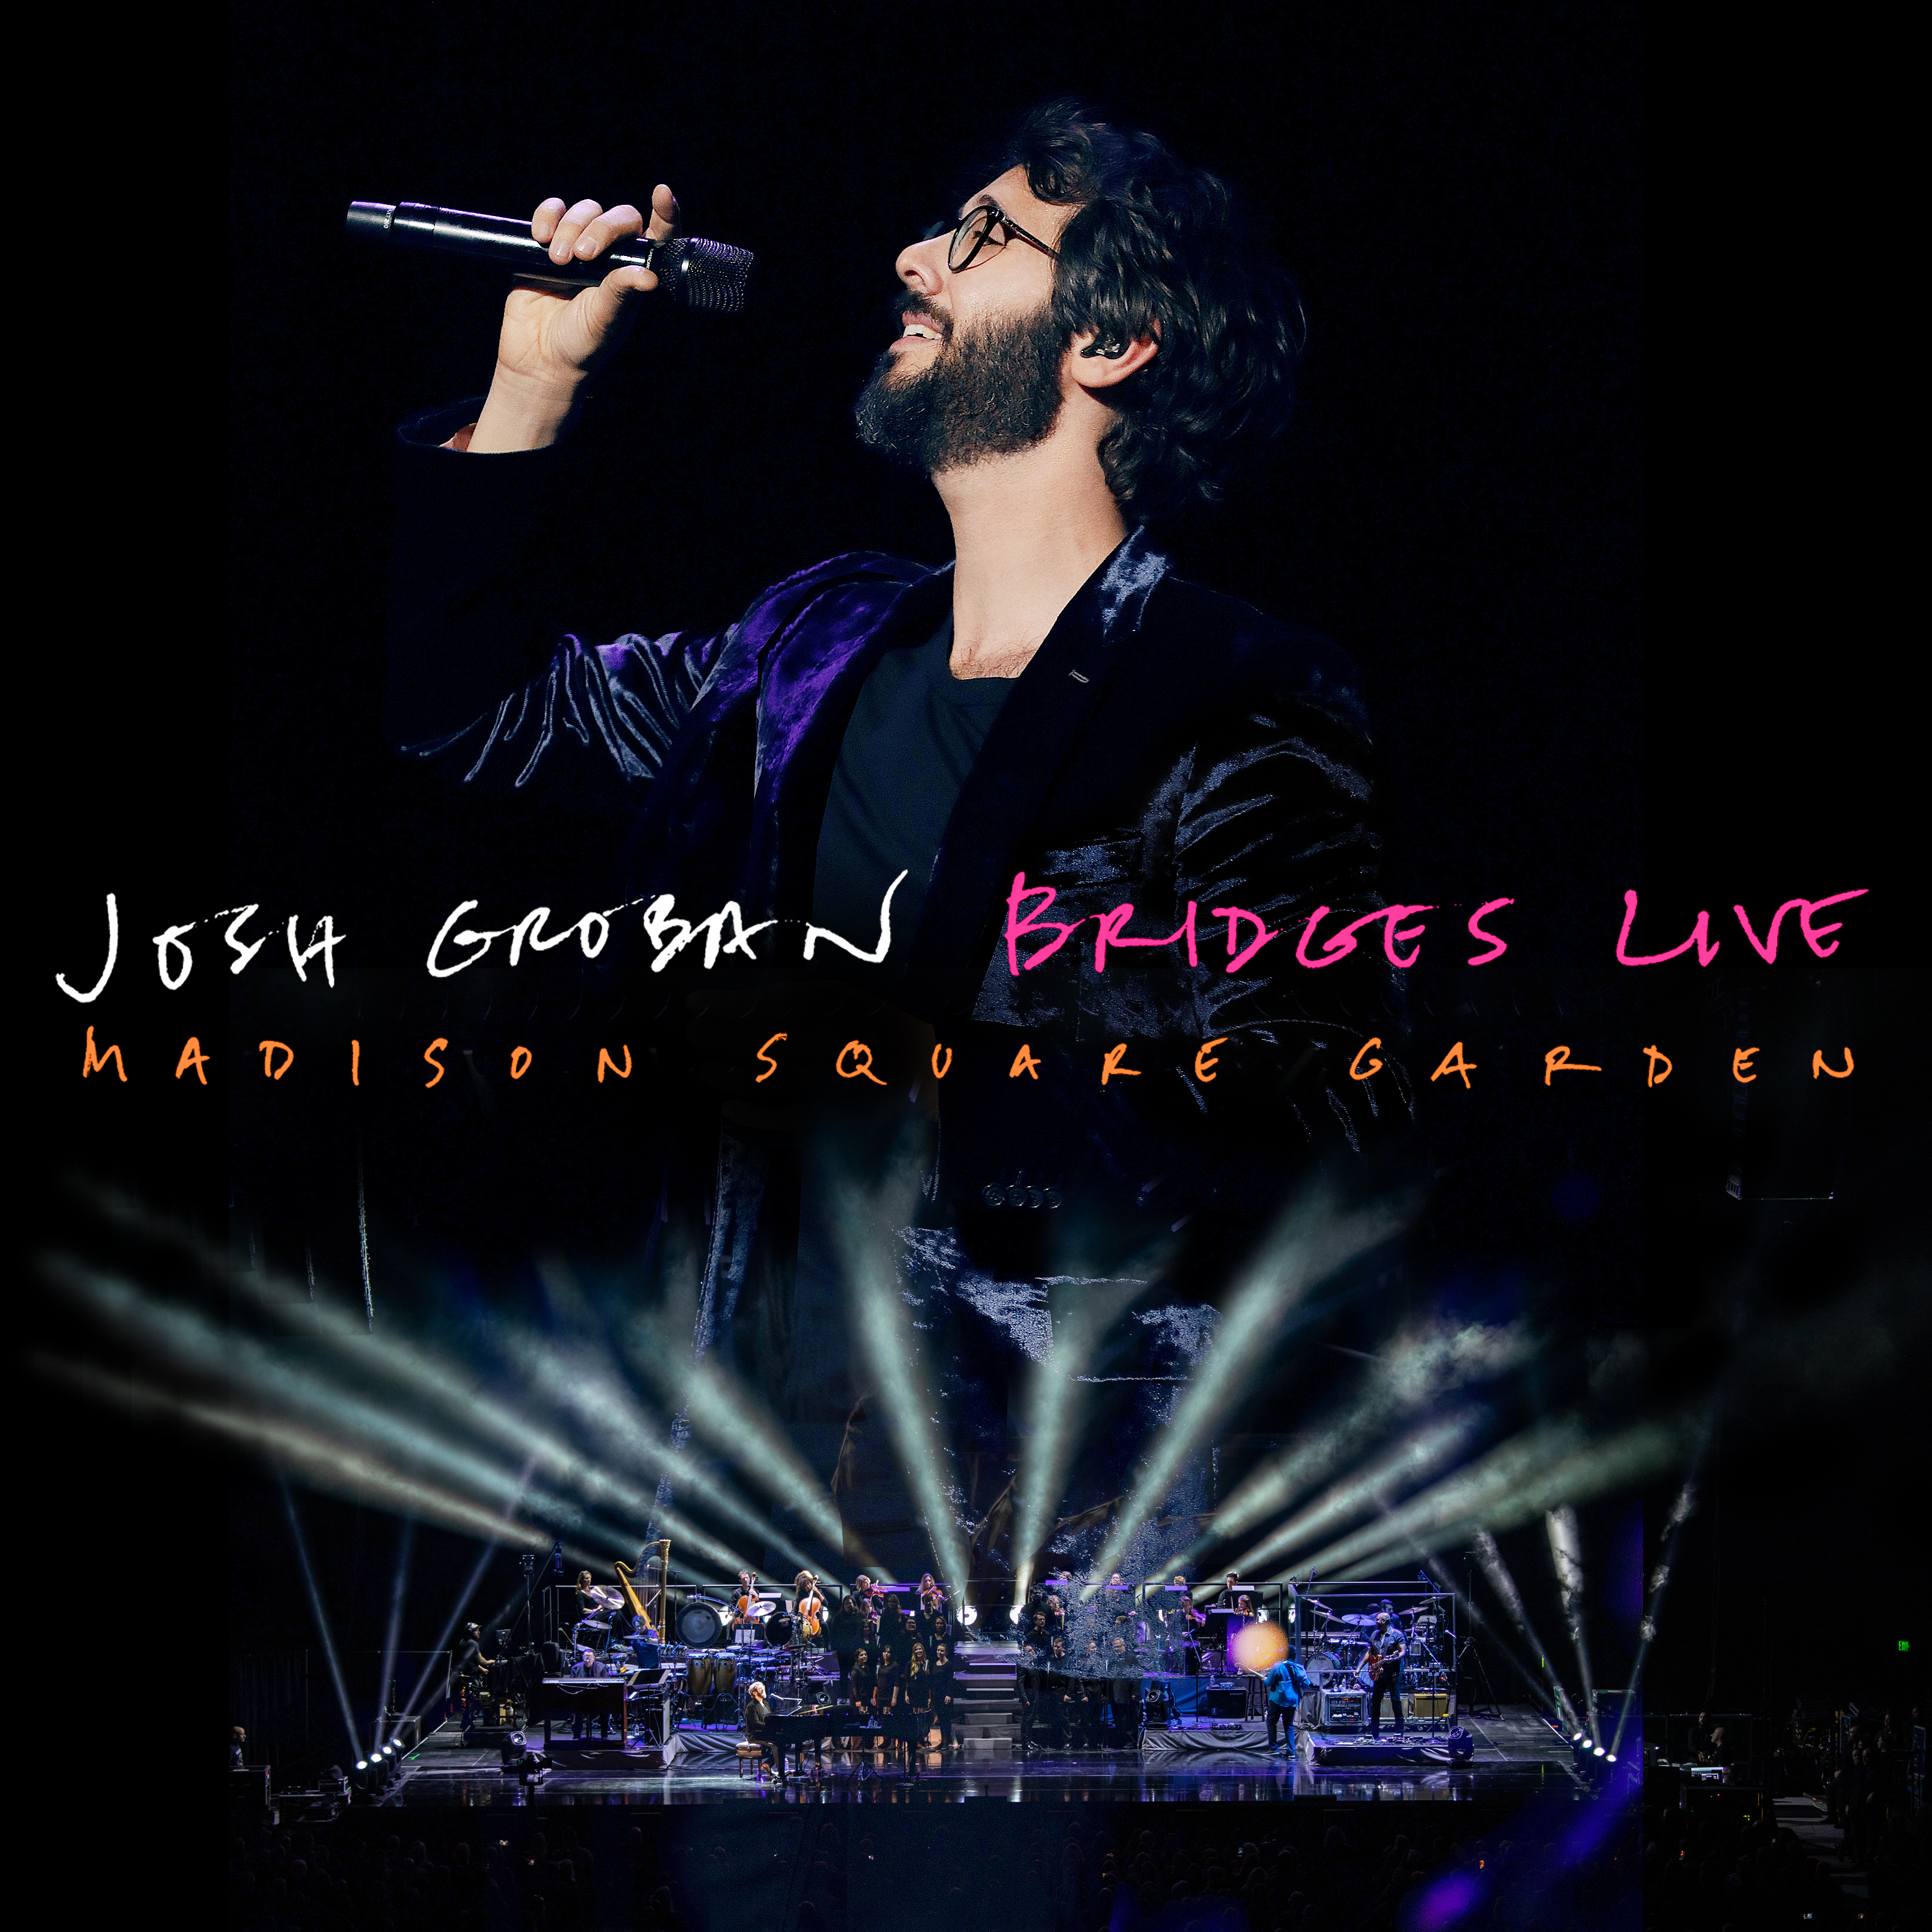 Bridges Live CD/DVD available on April 19th!